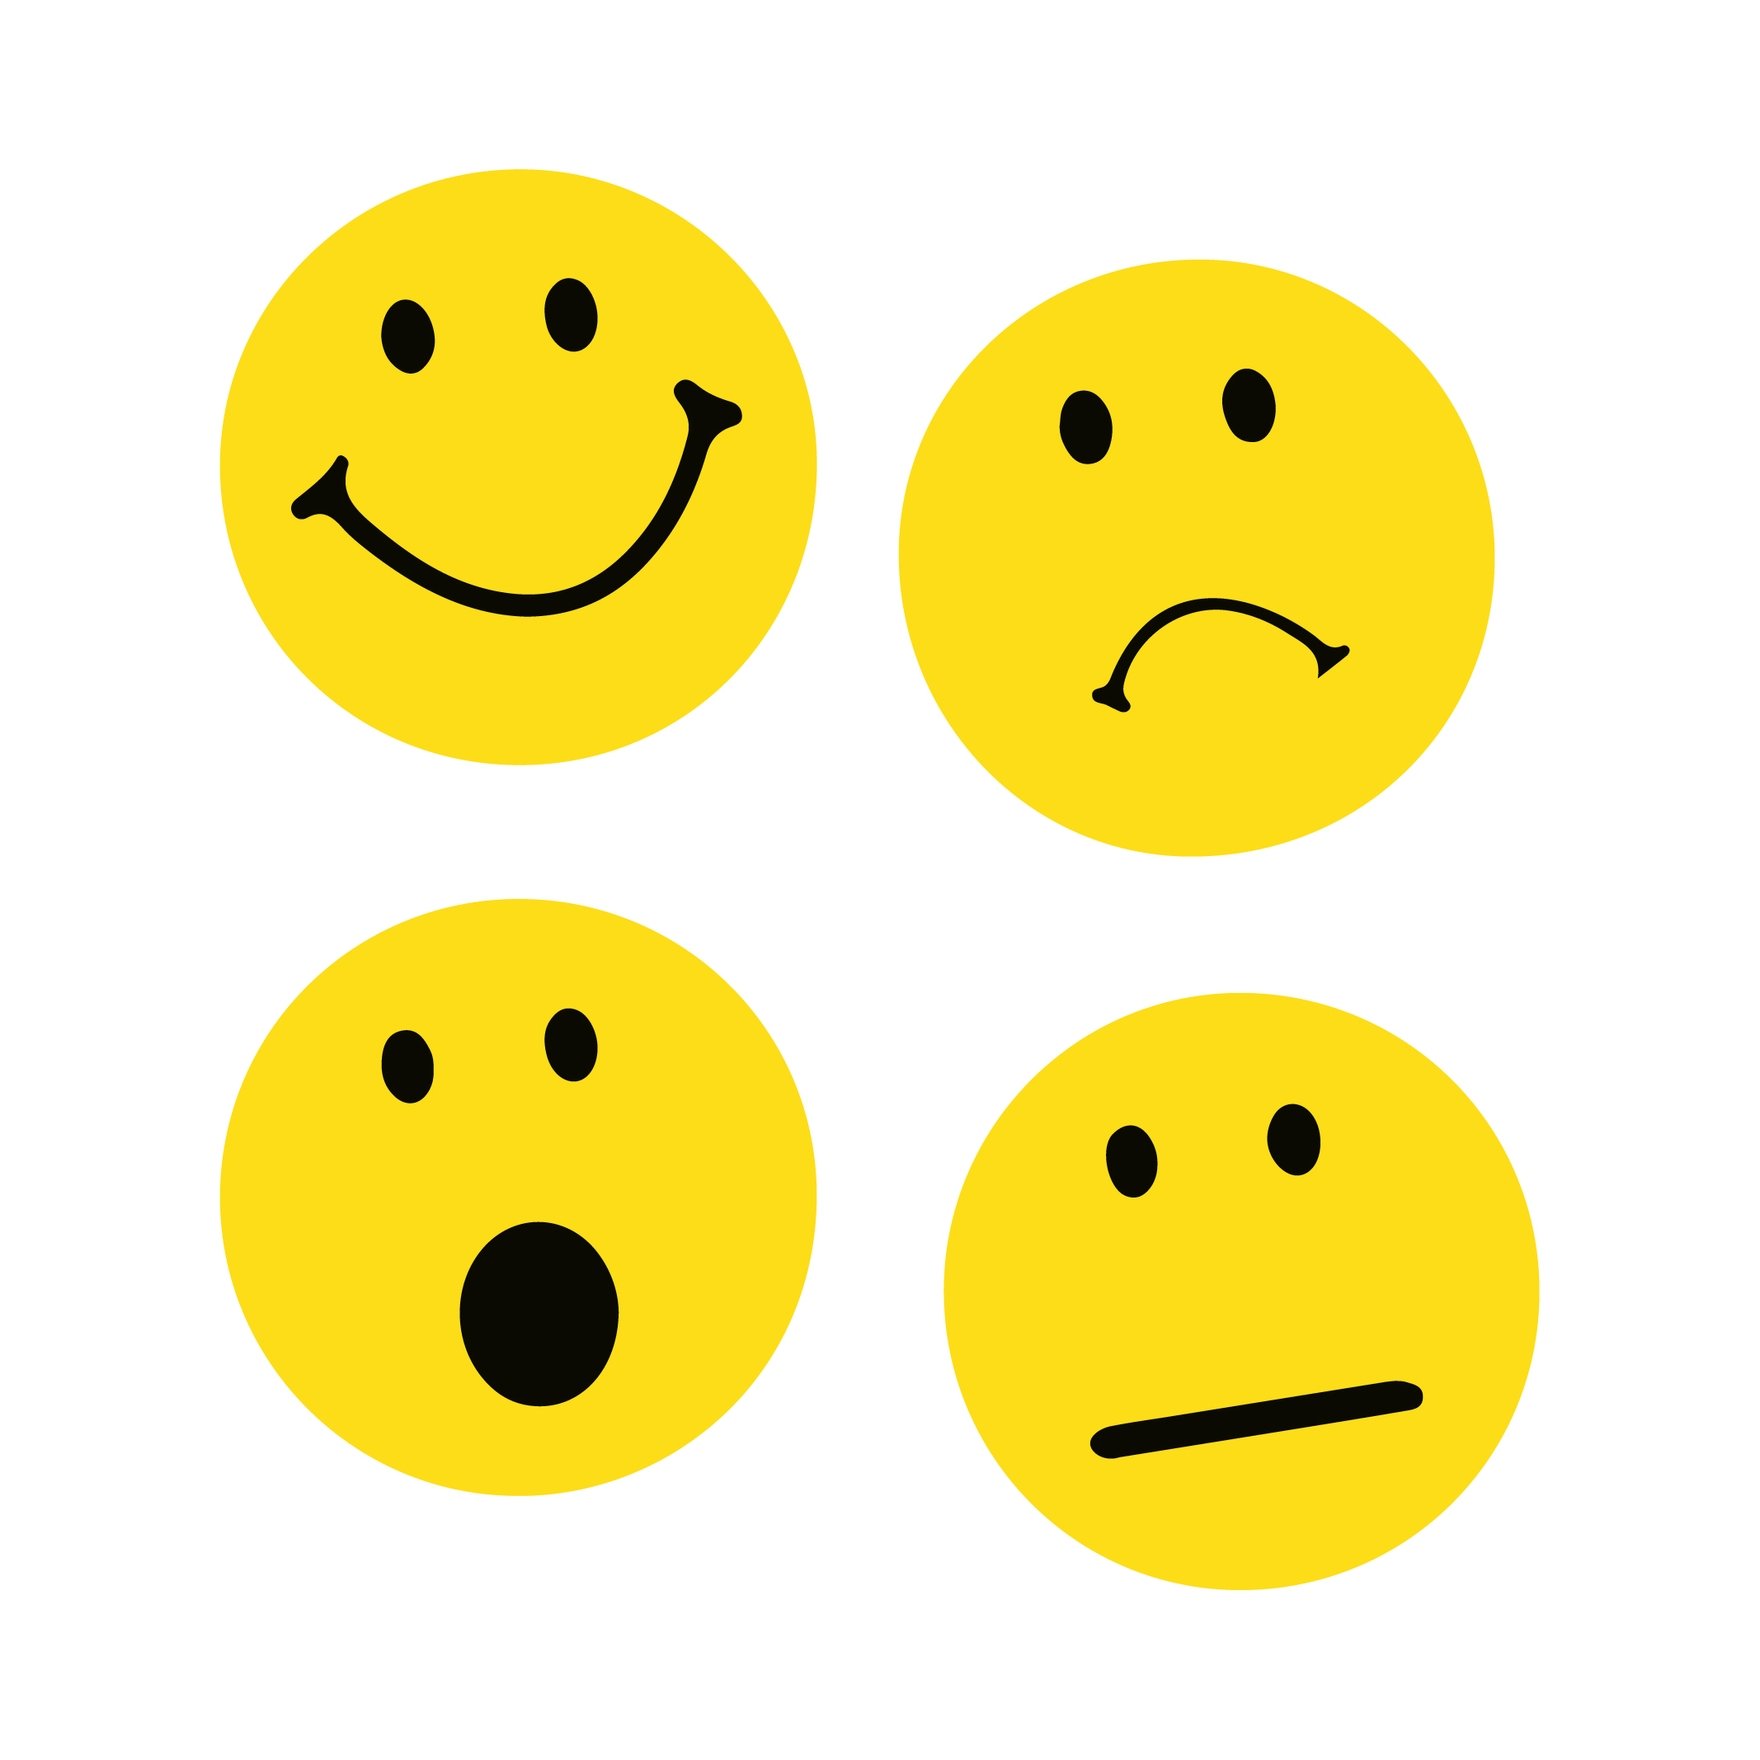 Emotions Vectors, Clipart & Illustrations for Free Download - illustAC